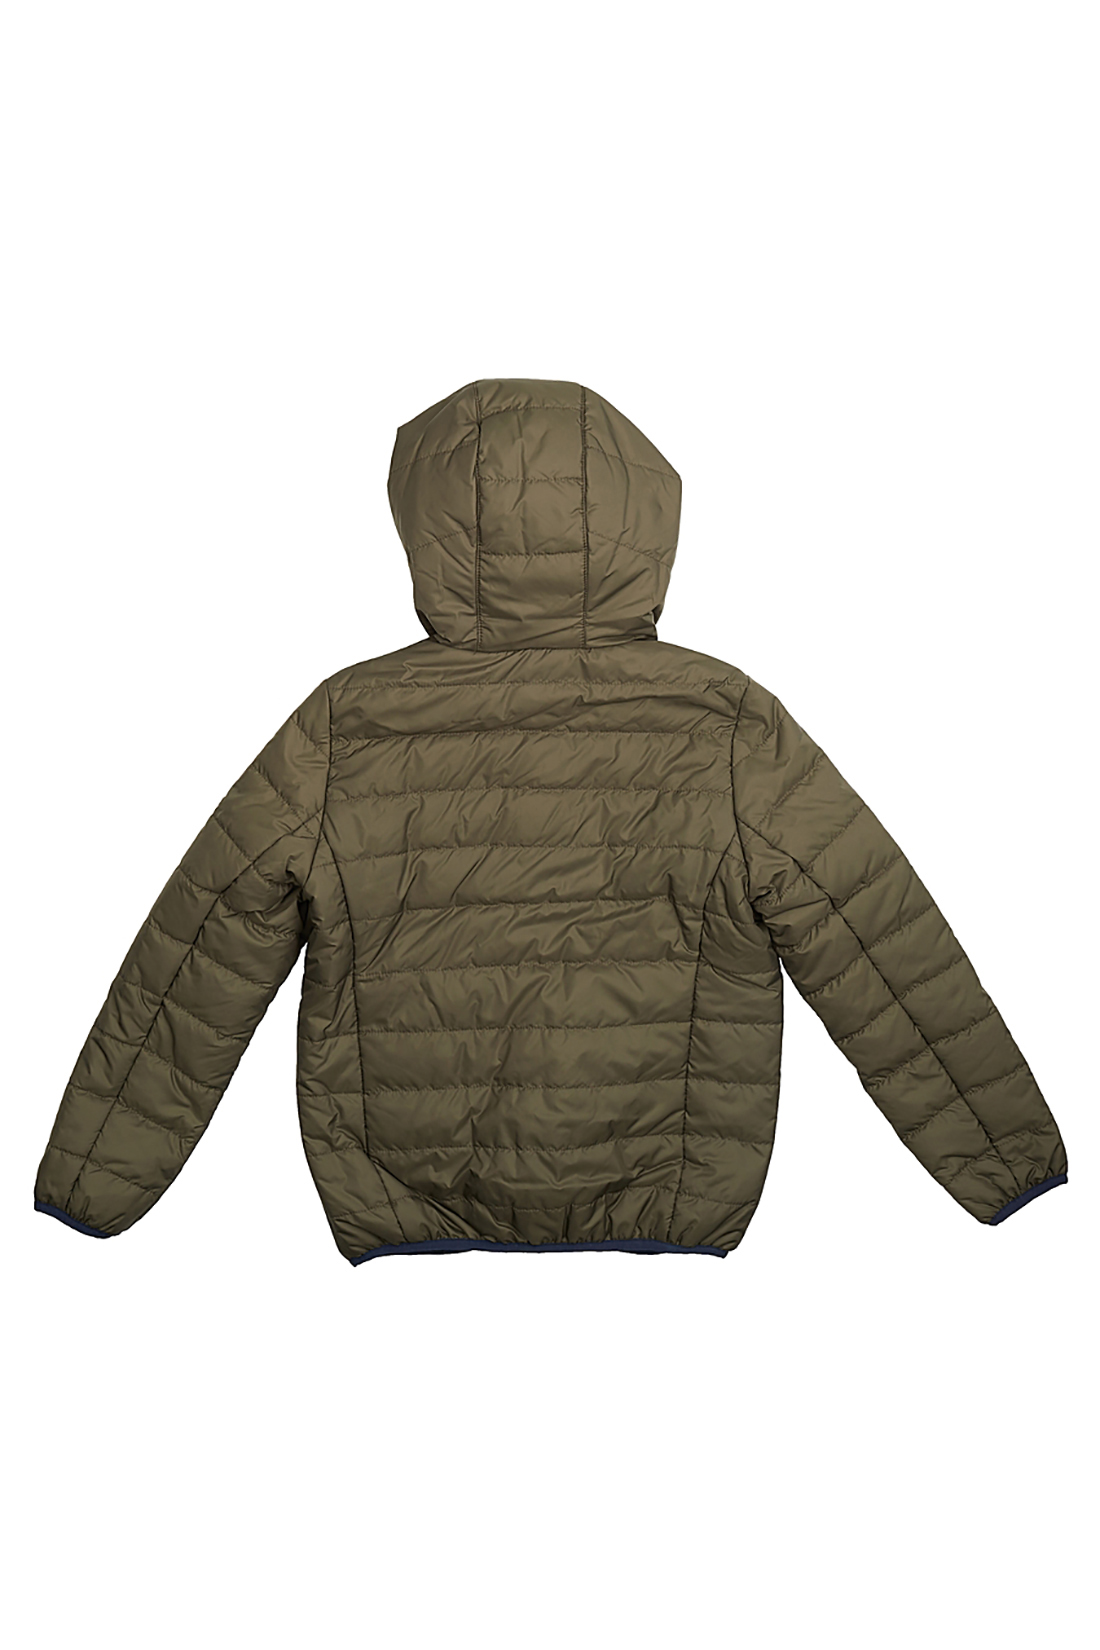 Куртка для мальчика (арт. baon BJ538001), размер 134-140, цвет зеленый Куртка для мальчика (арт. baon BJ538001) - фото 2